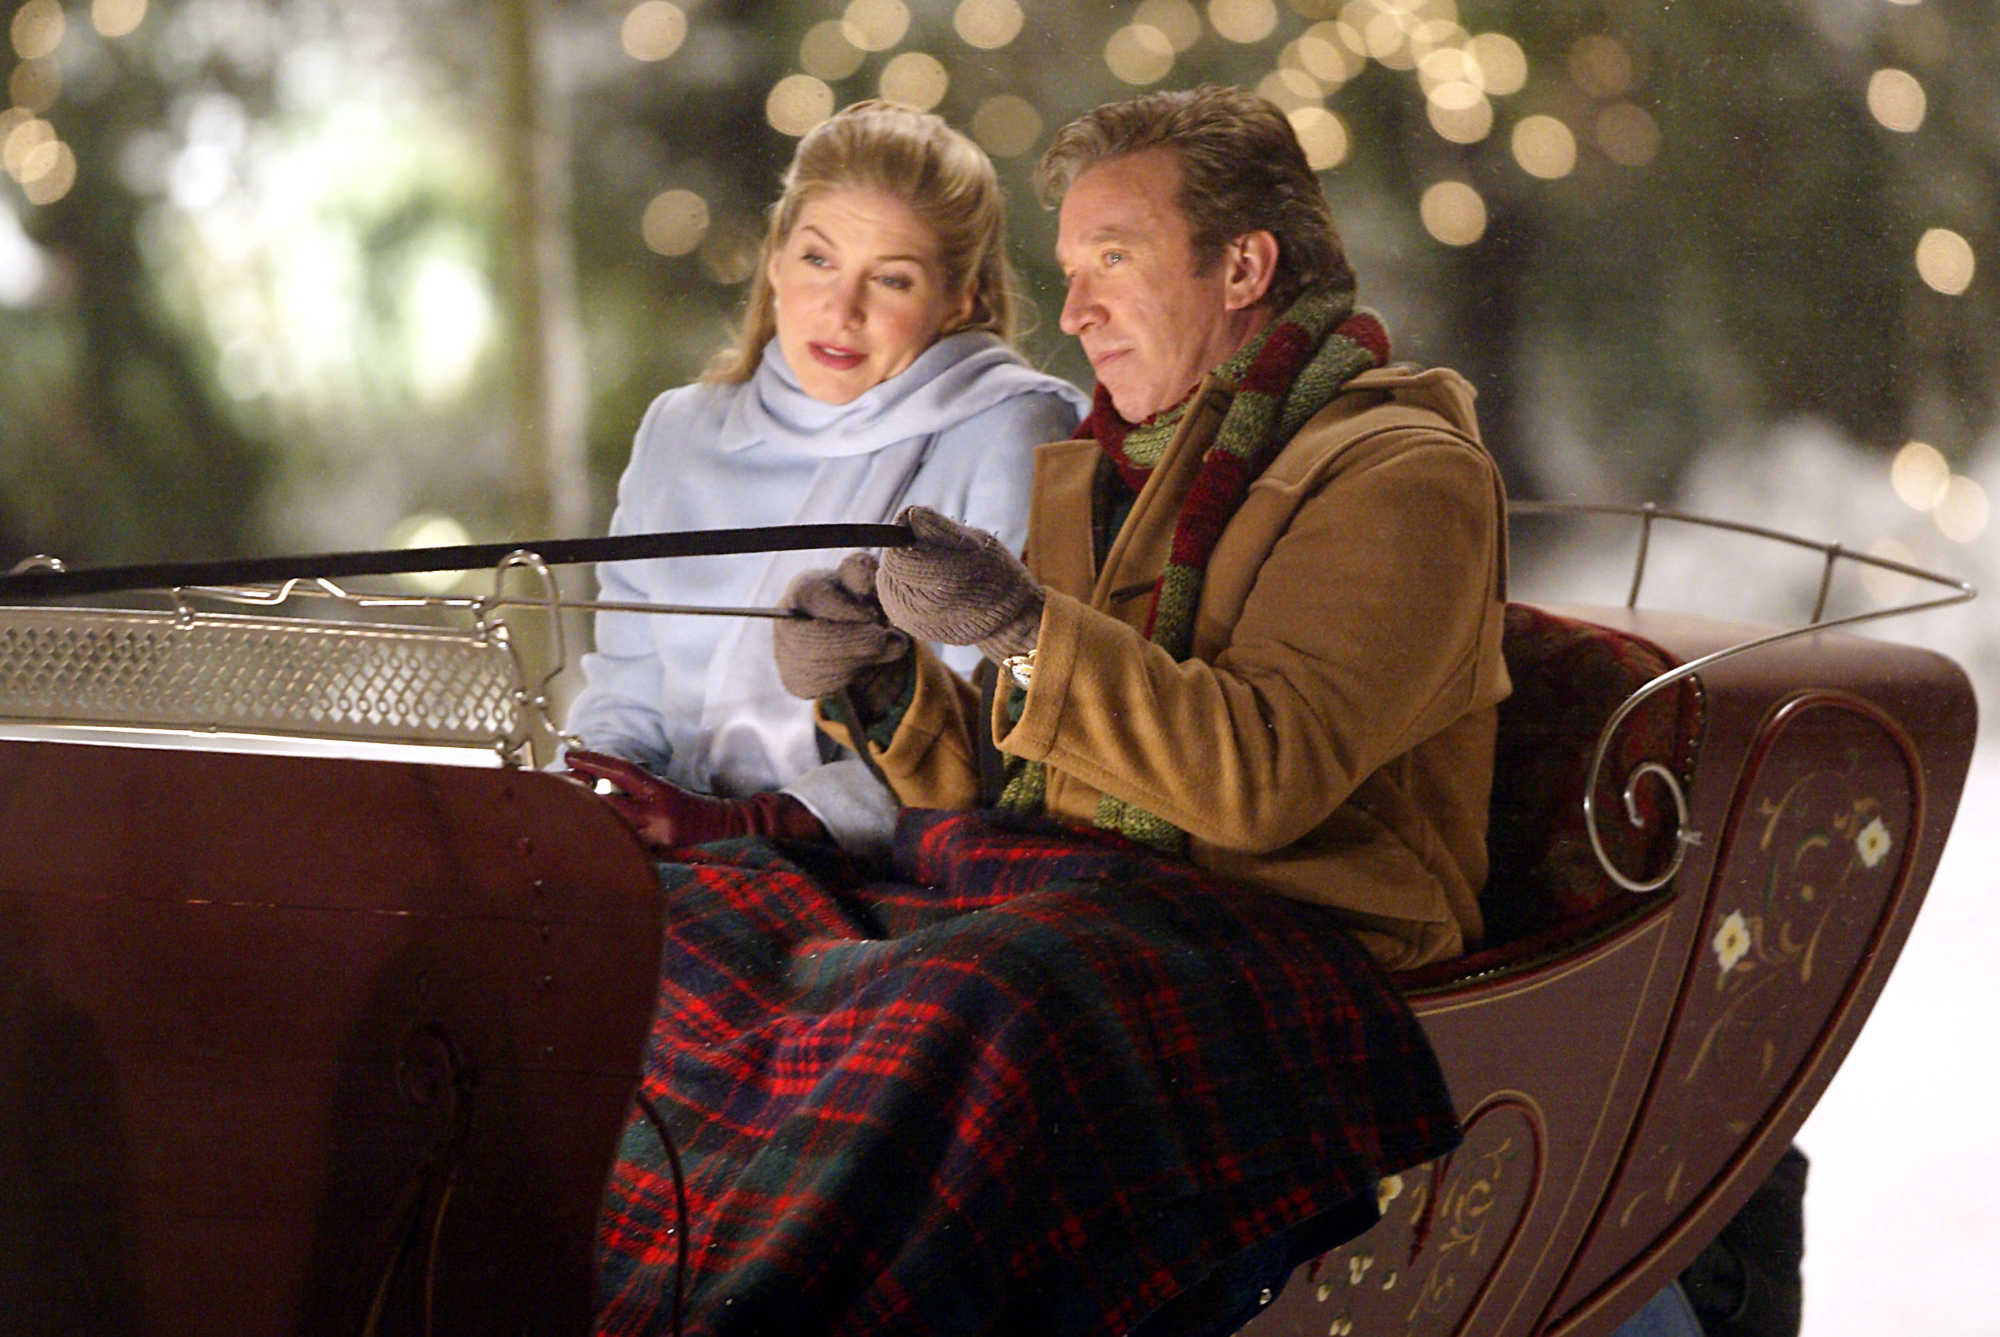 'The Santa Clause 2' Elizabeth Mitchell as Carol and Tim Allen as Scott Calvin, Santa sitting in Santa's sleigh